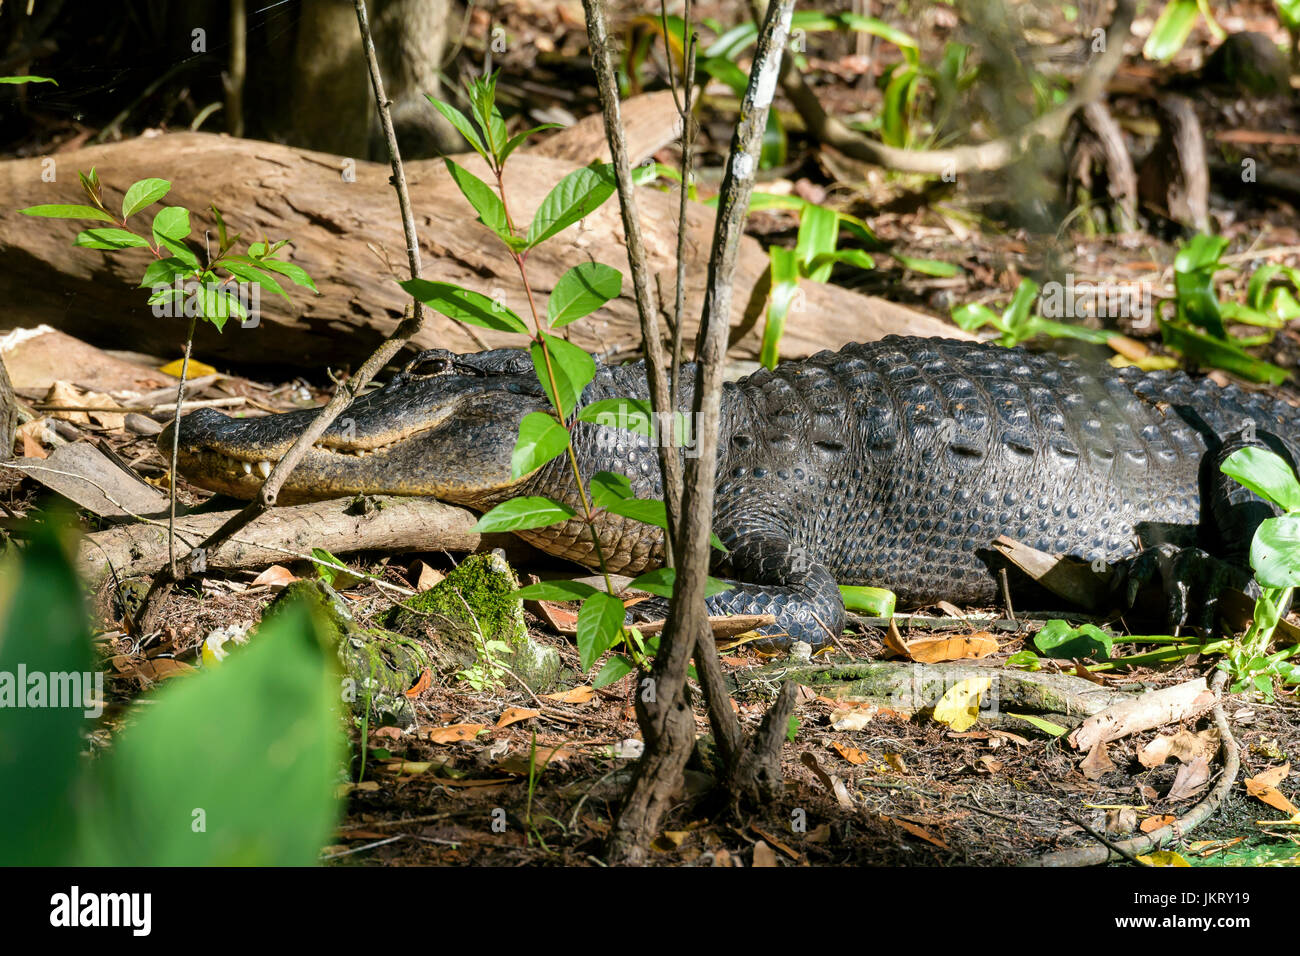 American alligator (Alligator mississippiensis) basking, Big Cypress Bend, Fakahatchee Strand, Florida, USA Stock Photo